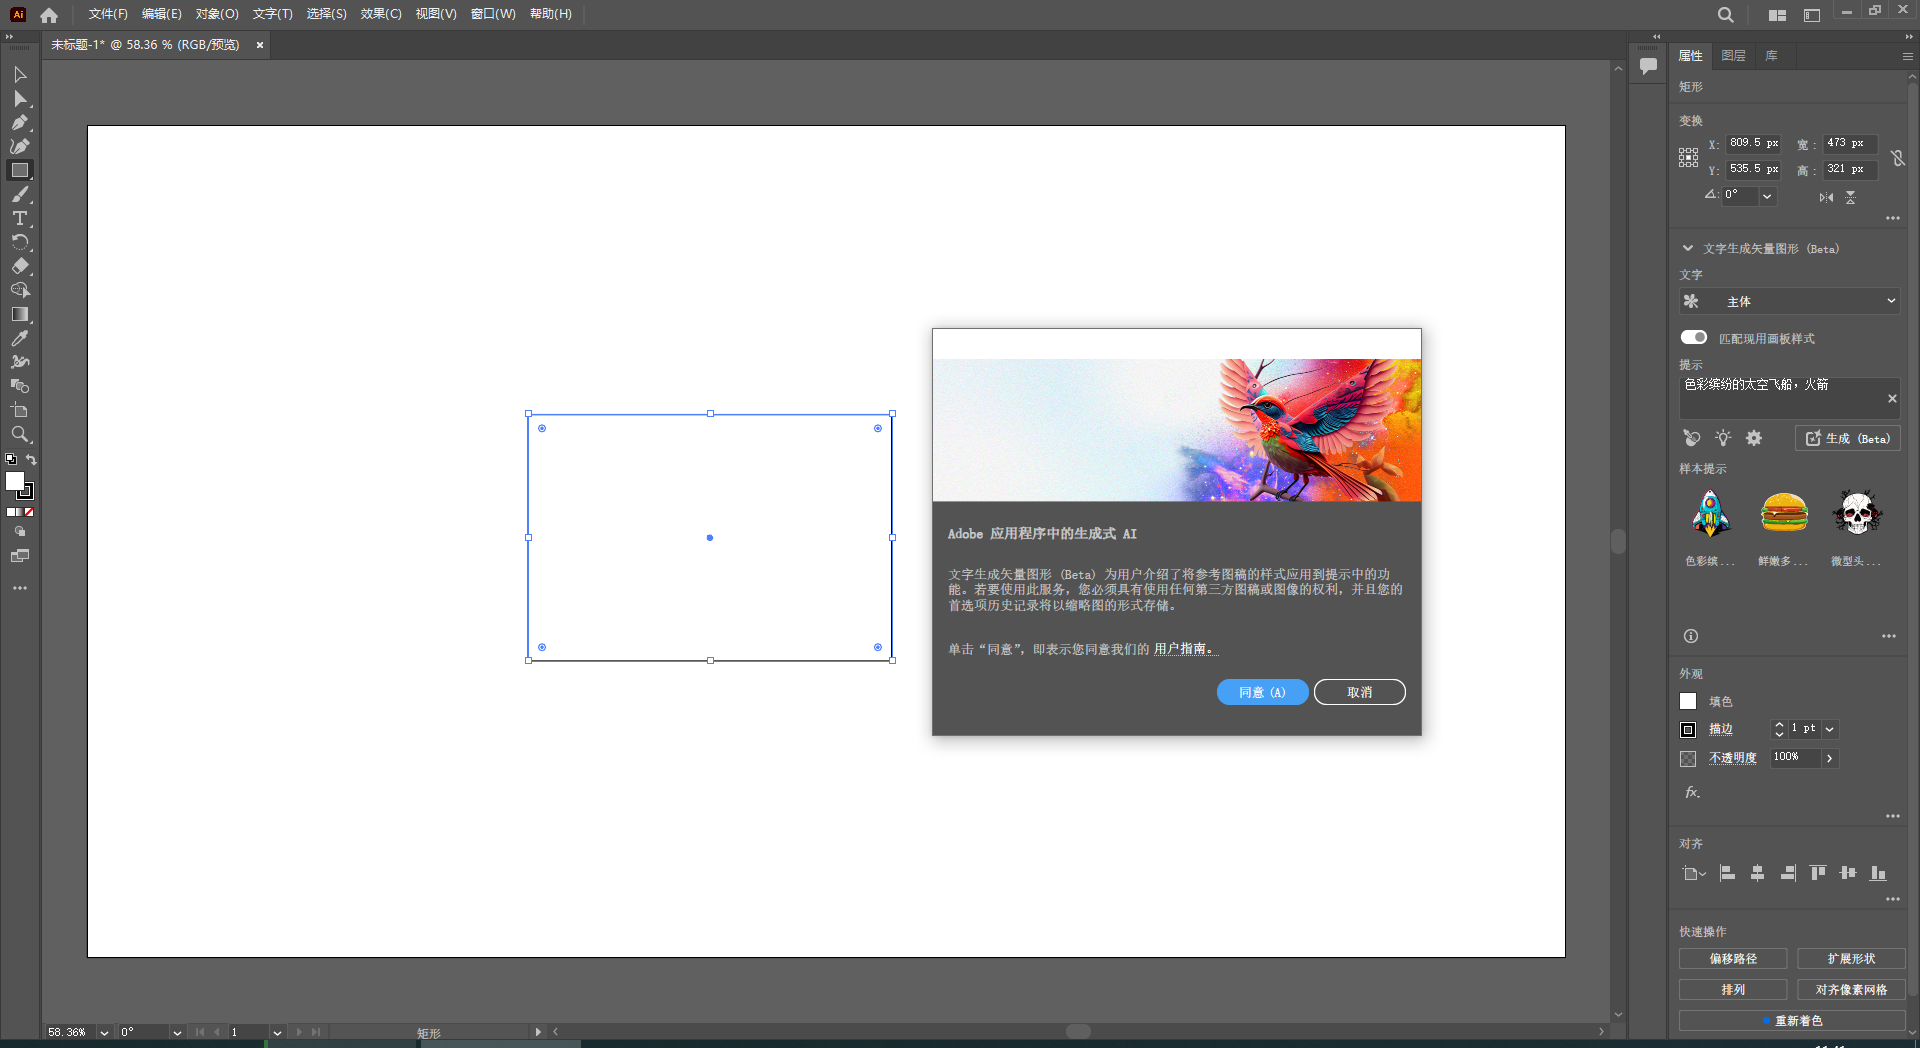 free instal Adobe Illustrator 2024 v28.0.0.88